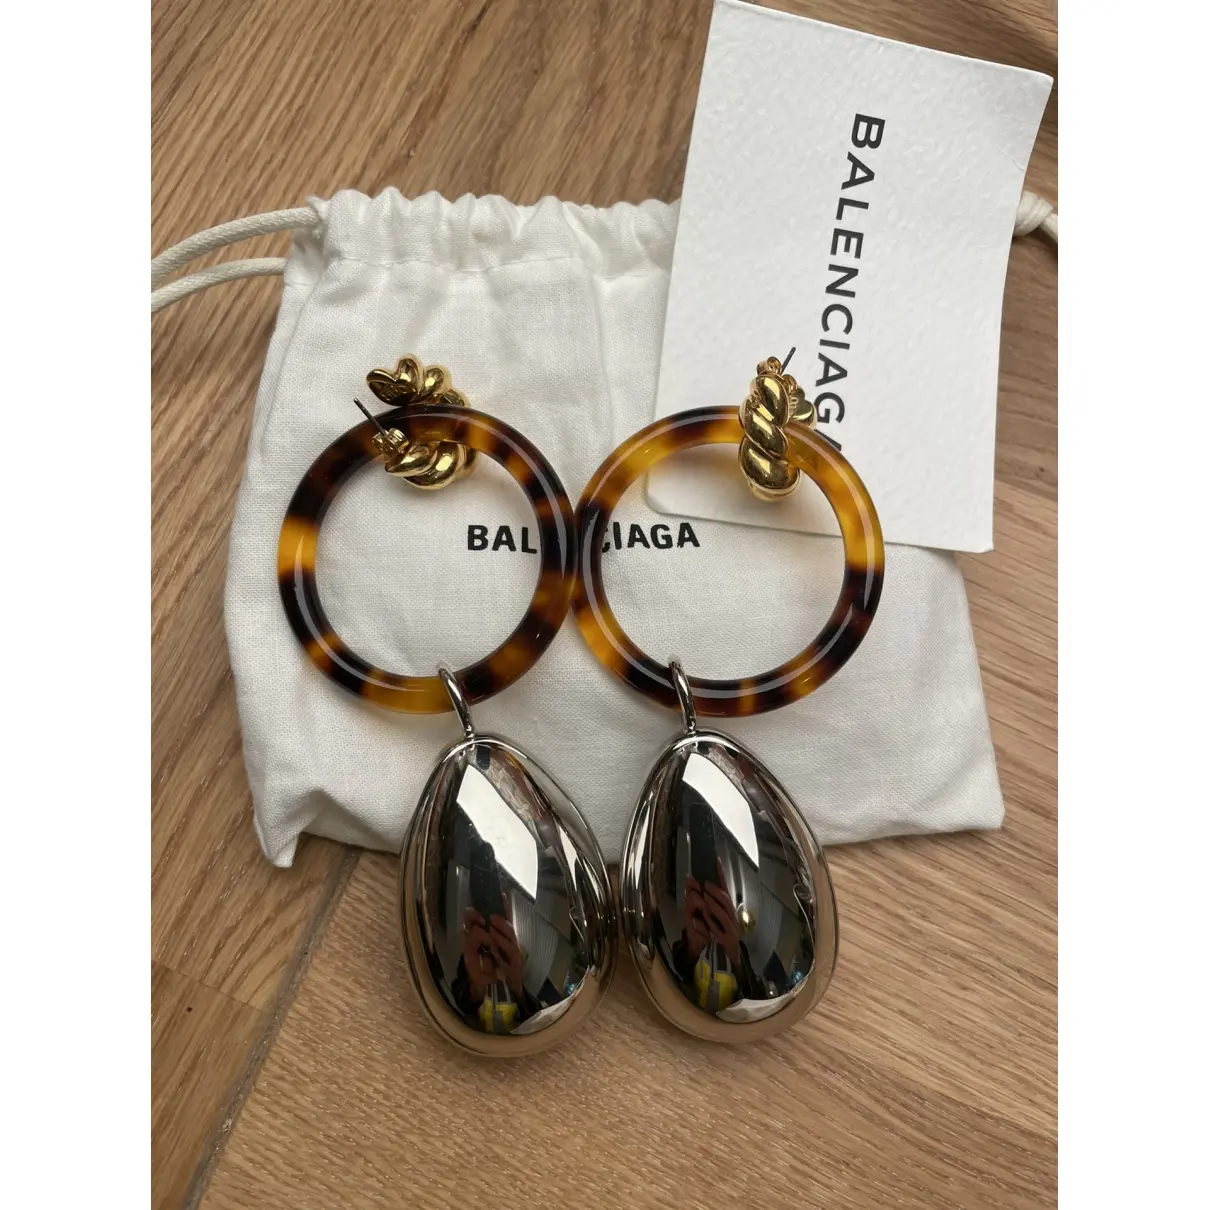 Buy Balenciaga Earrings online